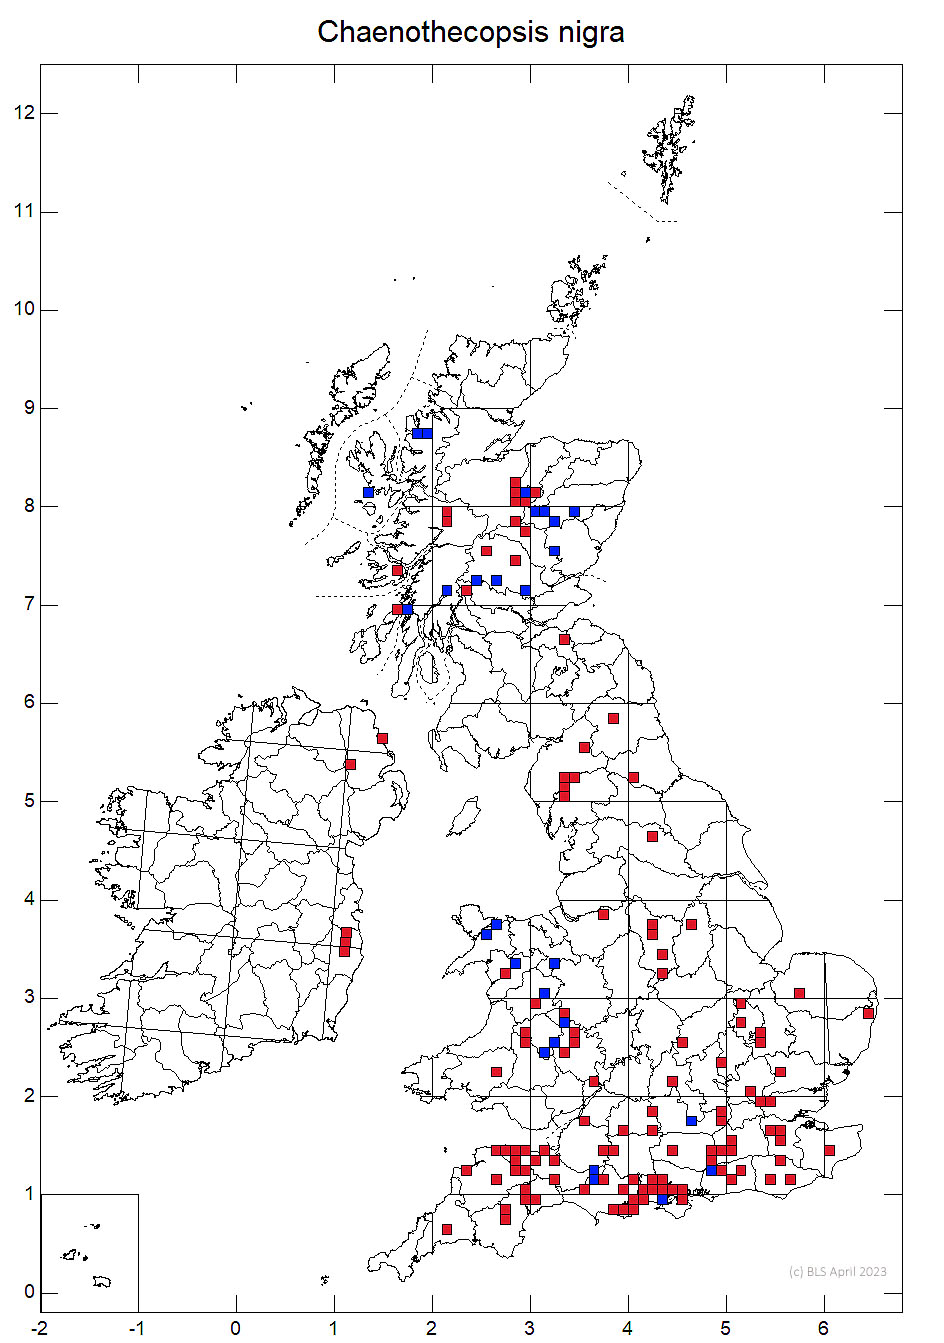 Chaenothecopsis nigra 10km sq distribution map